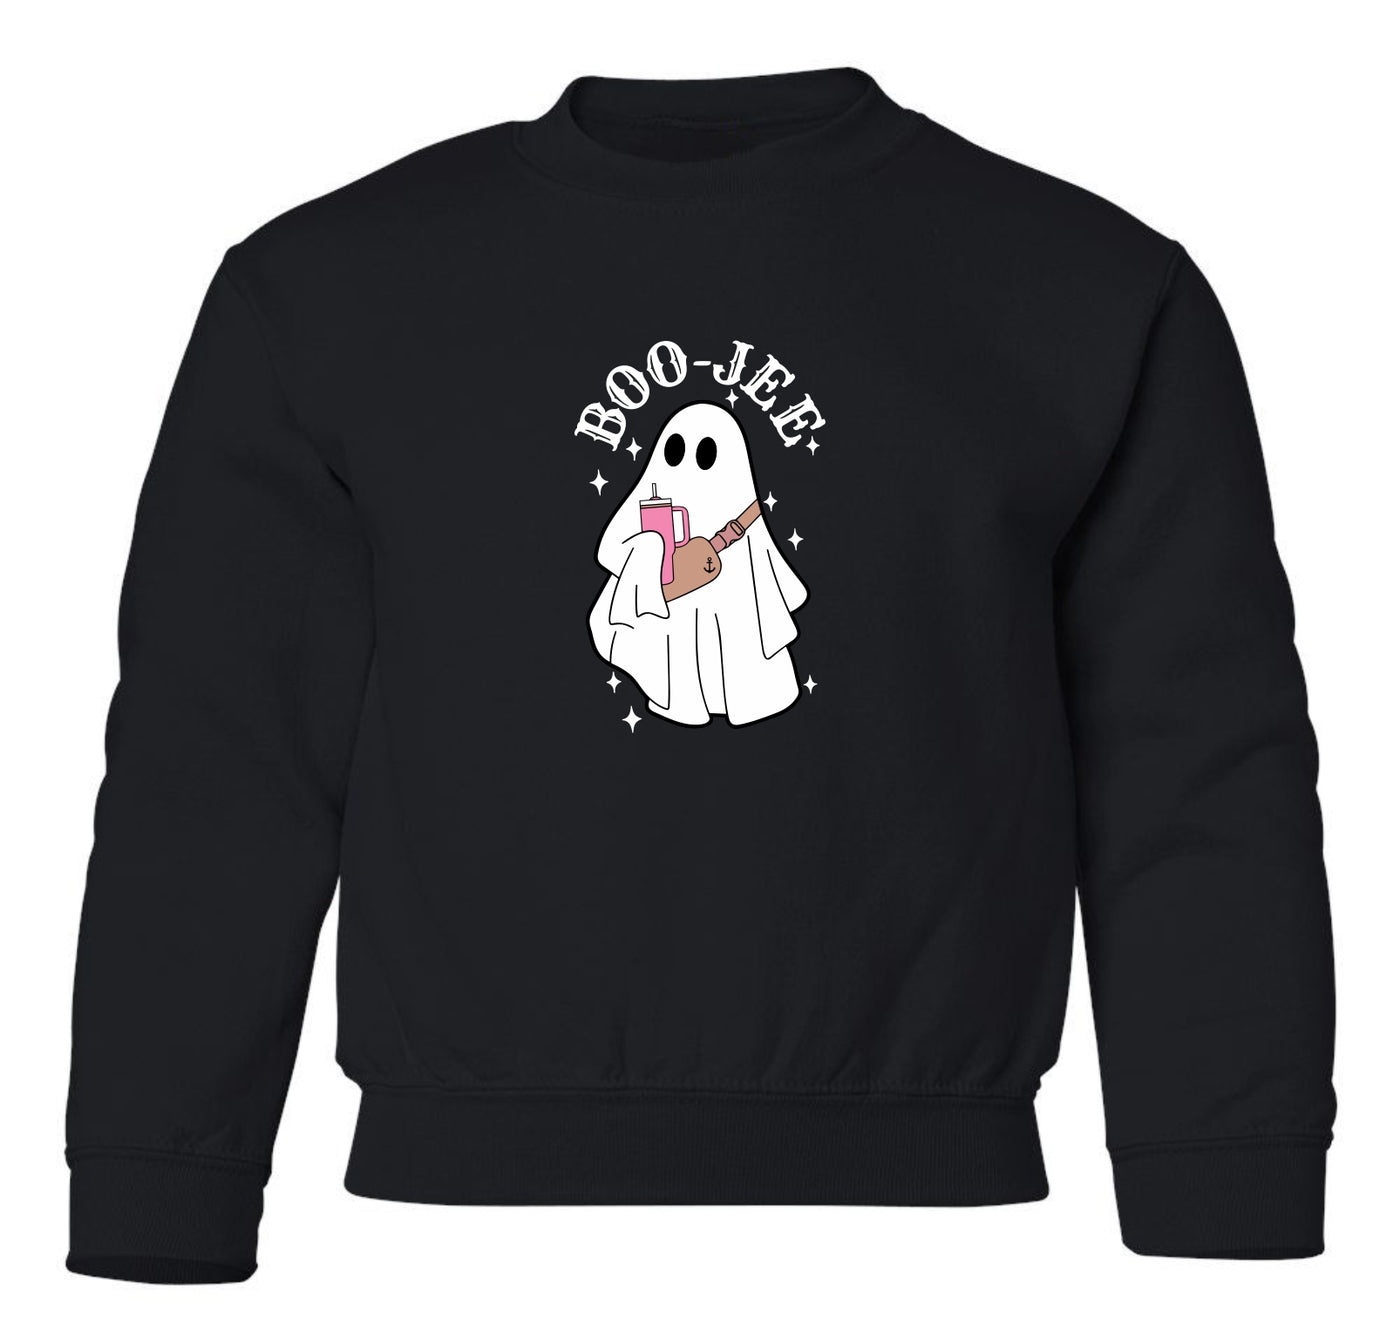 "Boo-jee" Toddler/Youth Crewneck Sweatshirt